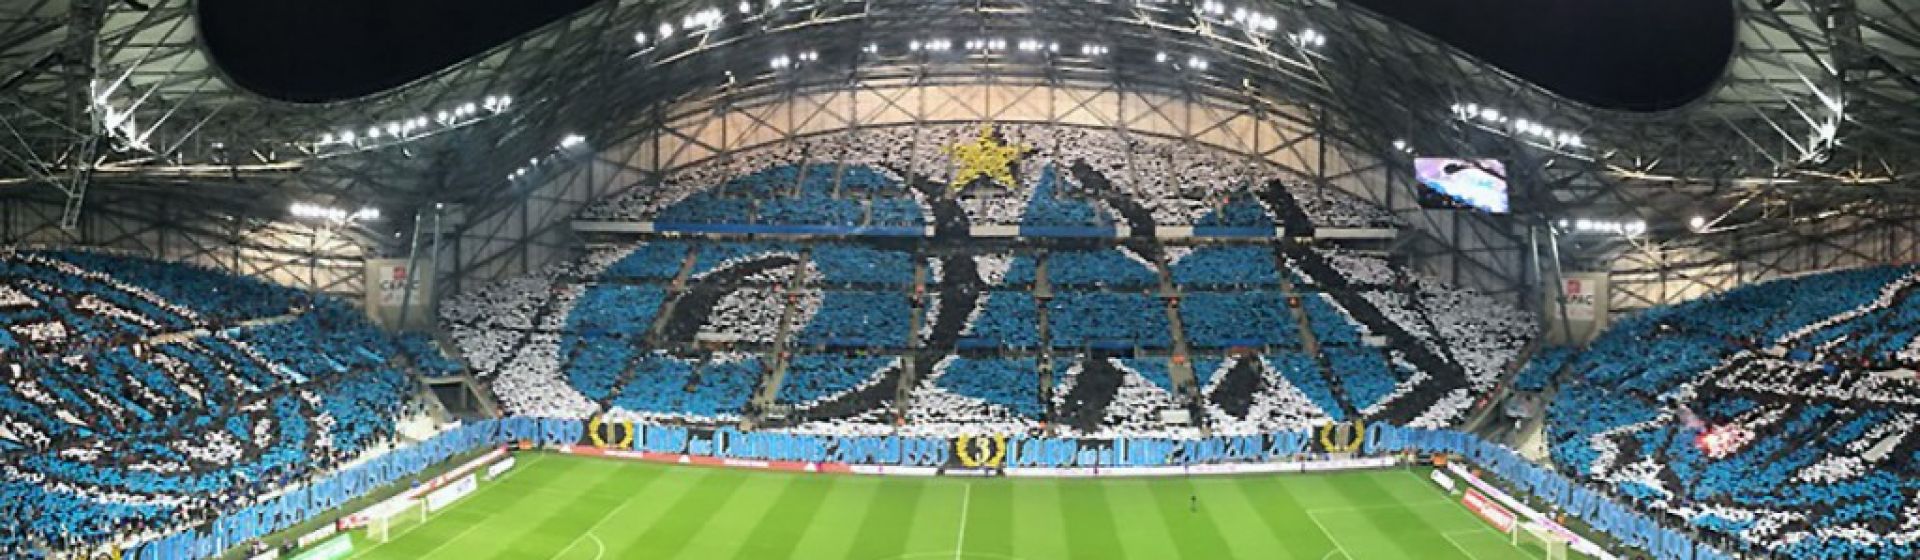 Olympique de Marseille added a - Olympique de Marseille